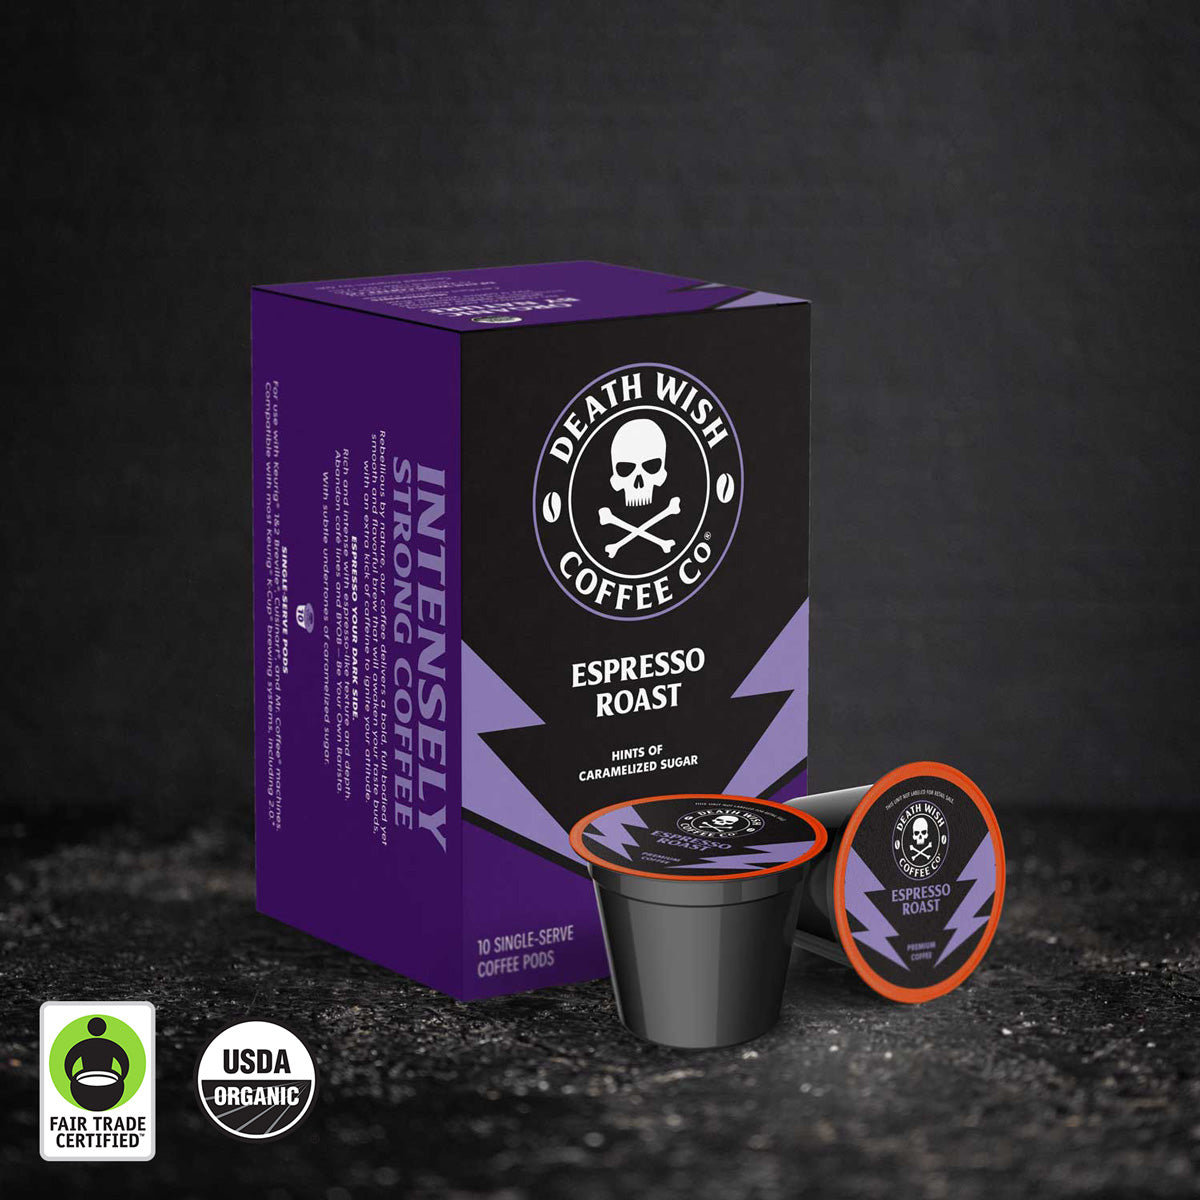 Death Wish Coffee Espresso Roast Single-Serve Coffee Pods - 10 Count